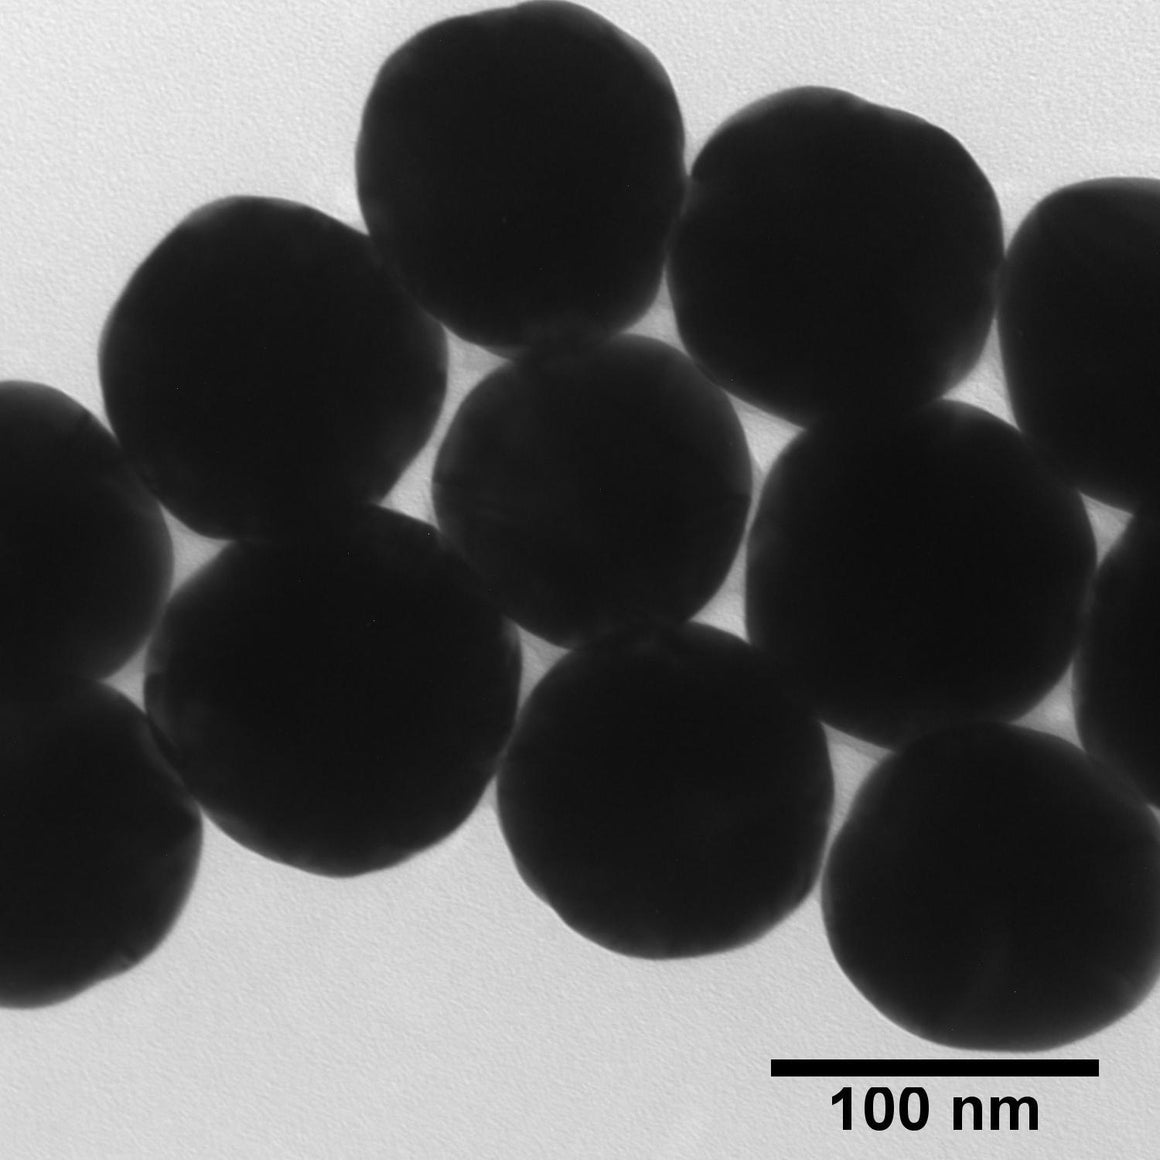 BioPure Gold Nanospheres – Bare (Citrate)